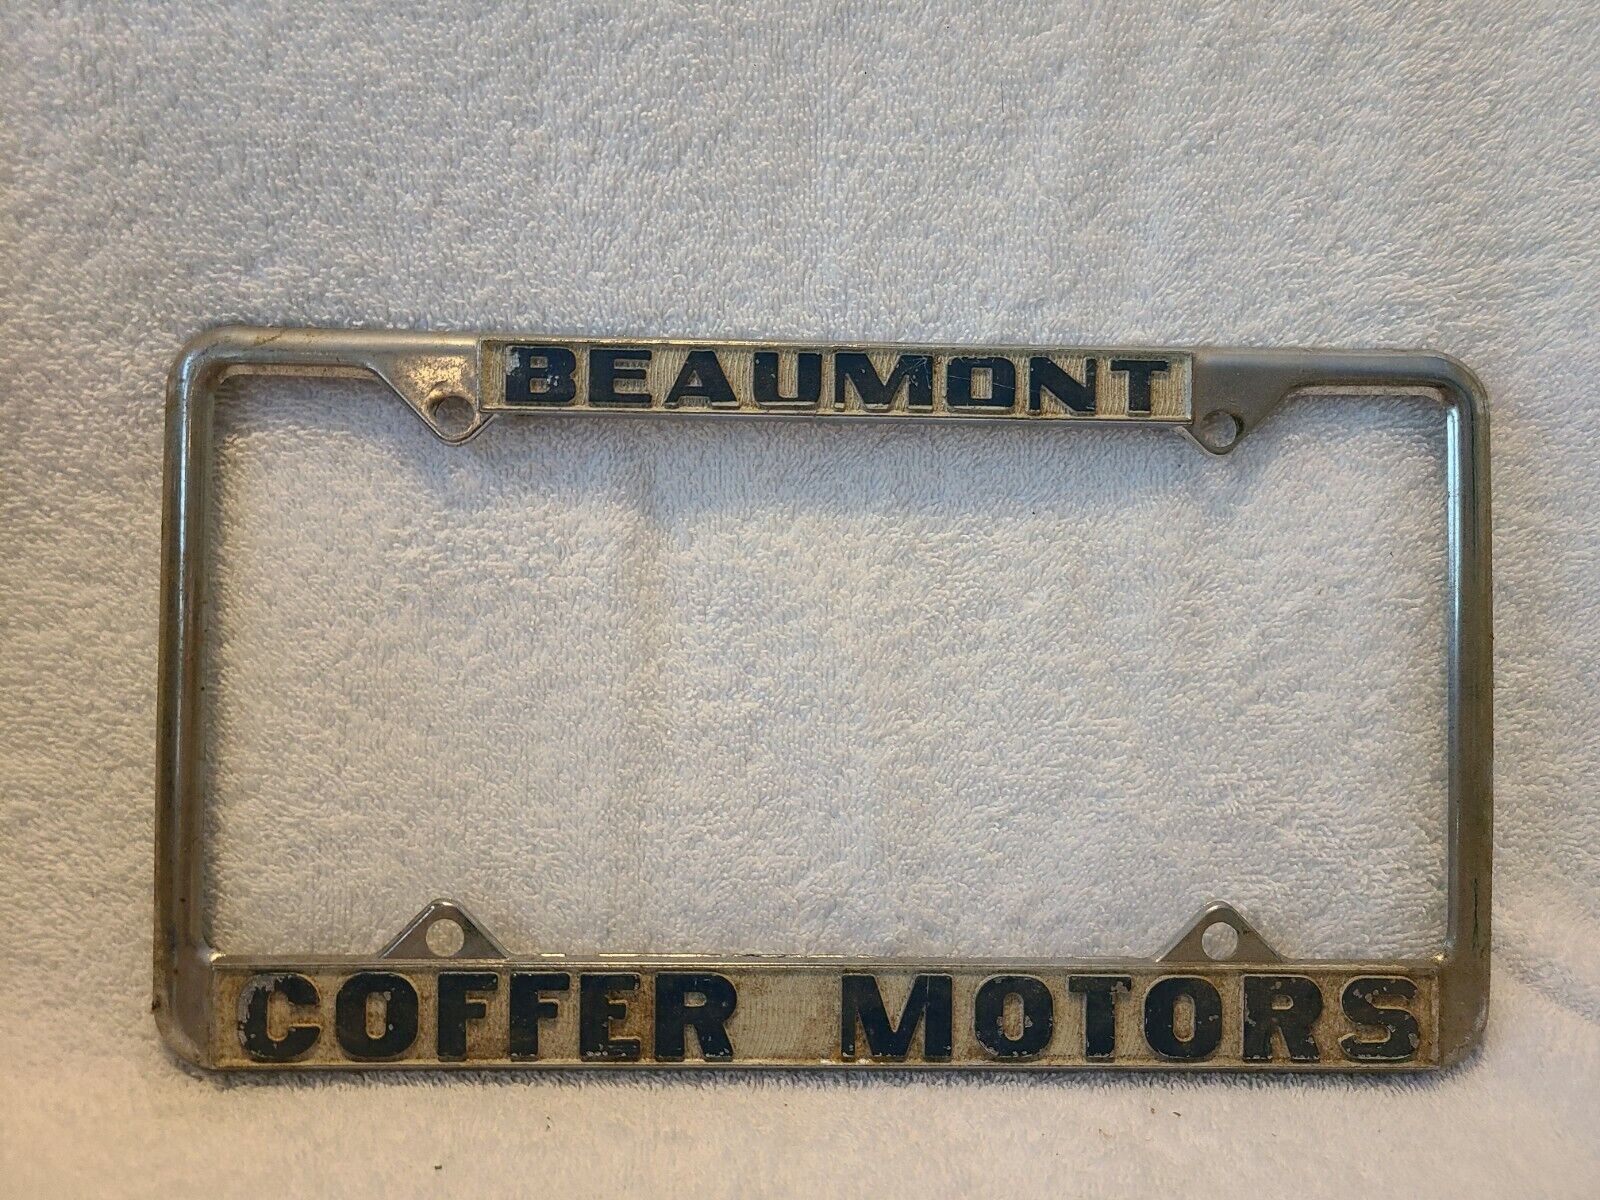 Beaumont California Coffer Motors Vintage Dealer License Plate Frame